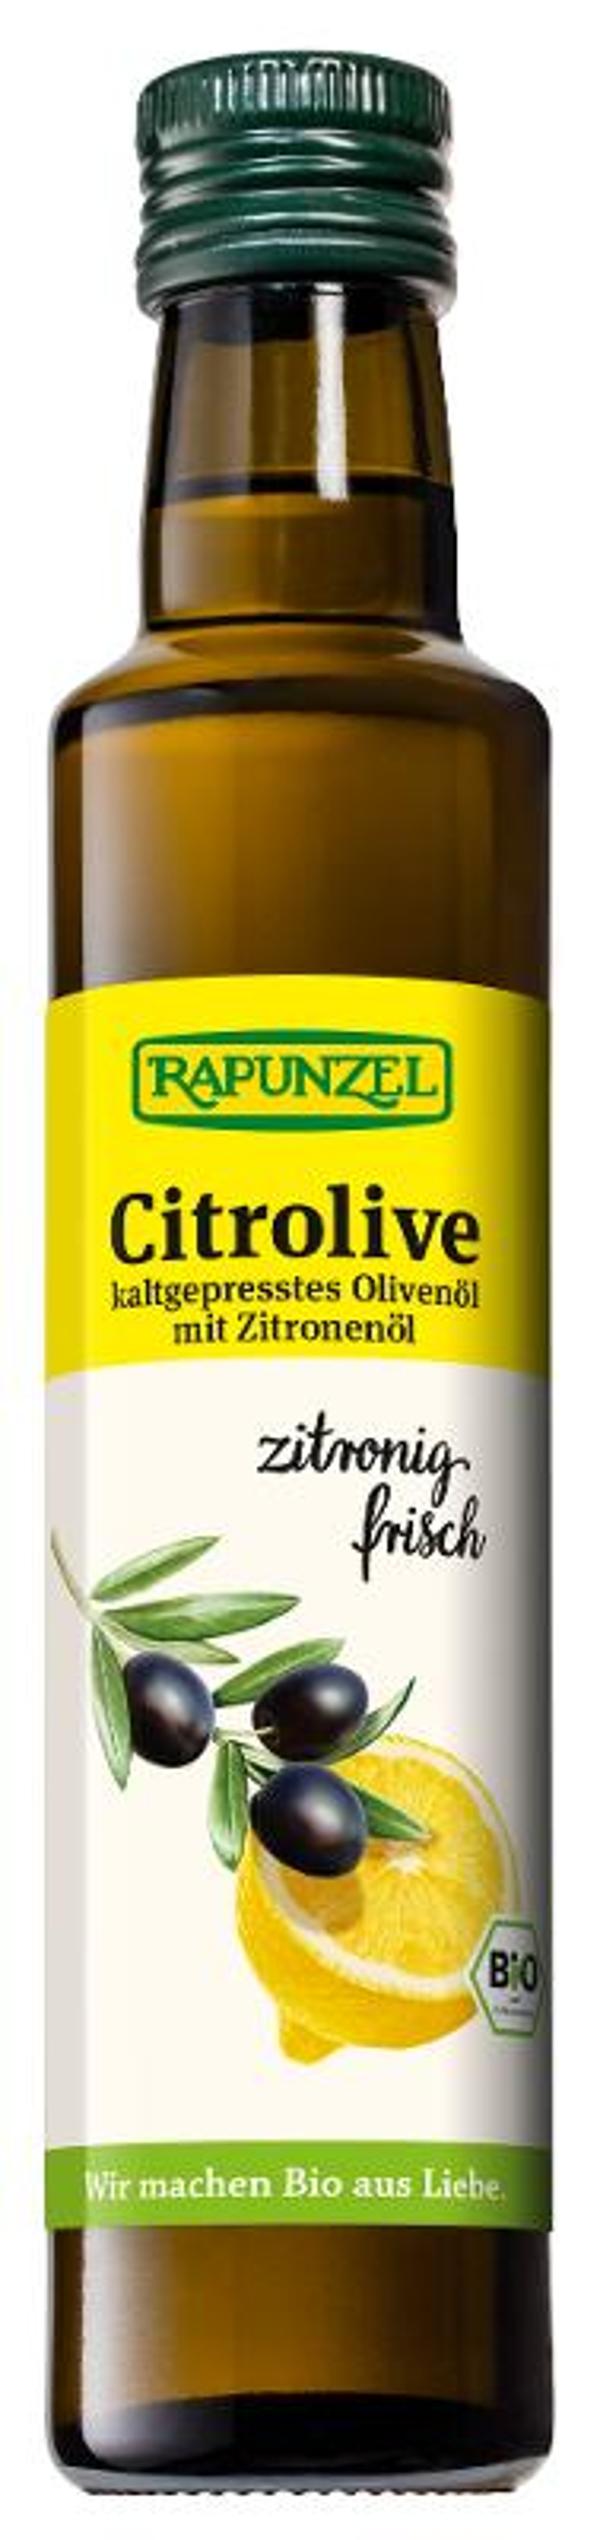 Produktfoto zu Rapunzel Citrolive - 250ml